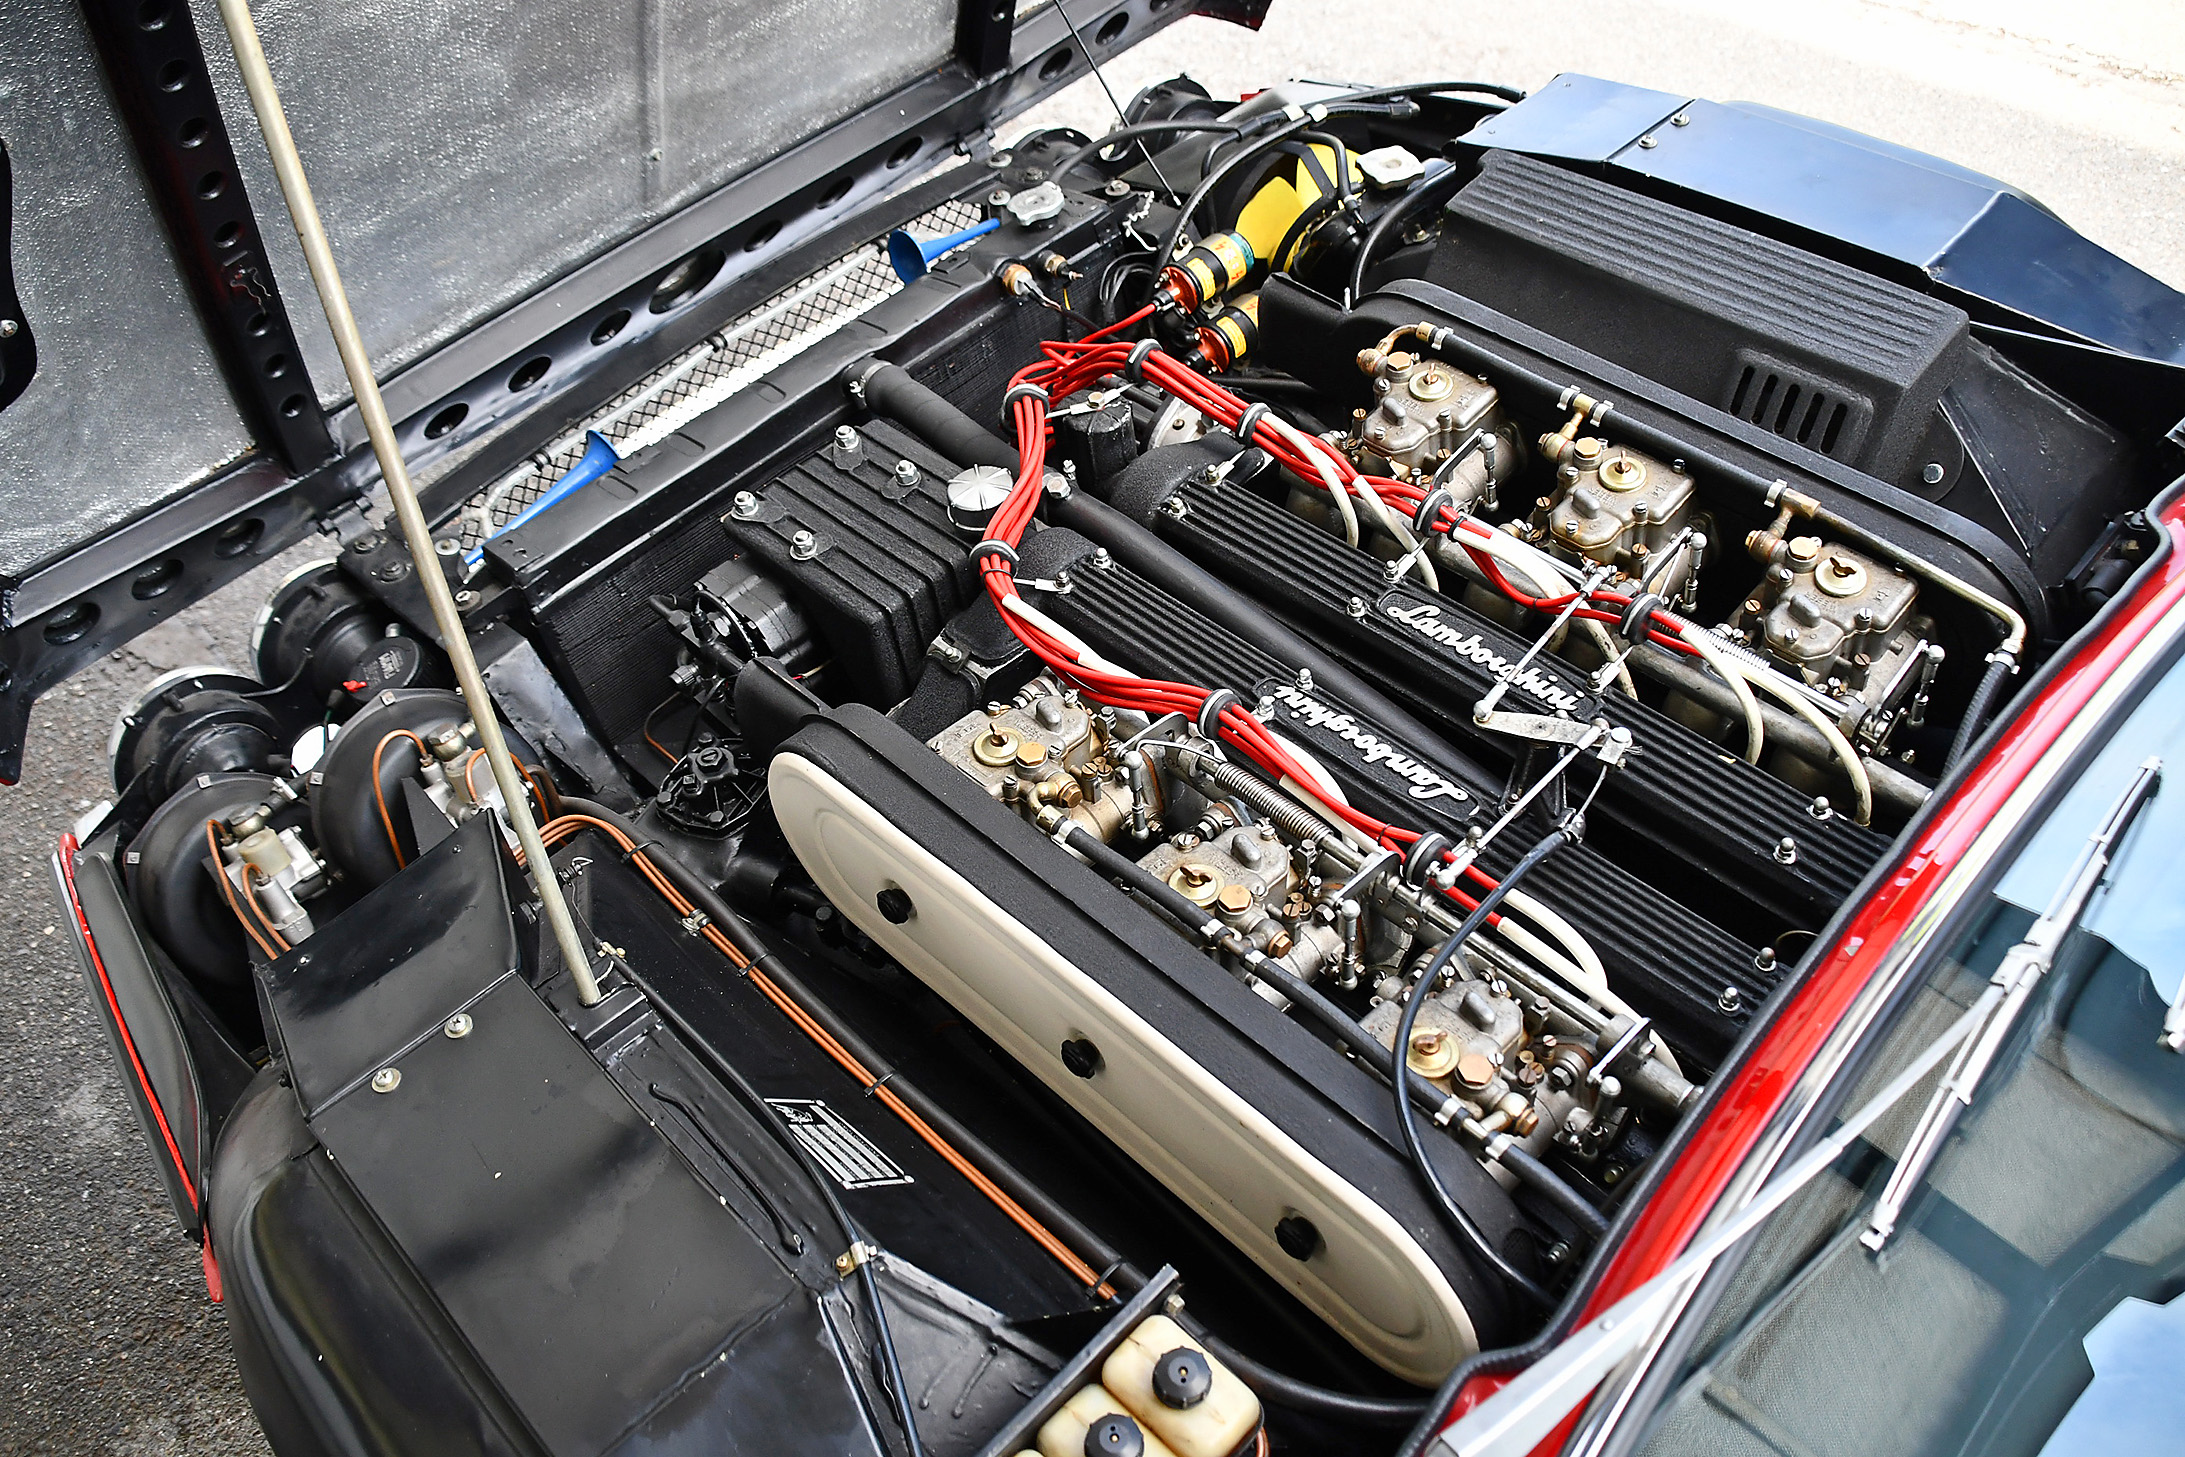 1970 Lamborghini Espada Series II – moteur V12 de 3929 cm³ et boîte à 5 rapports – Swiss Classic World 2023.